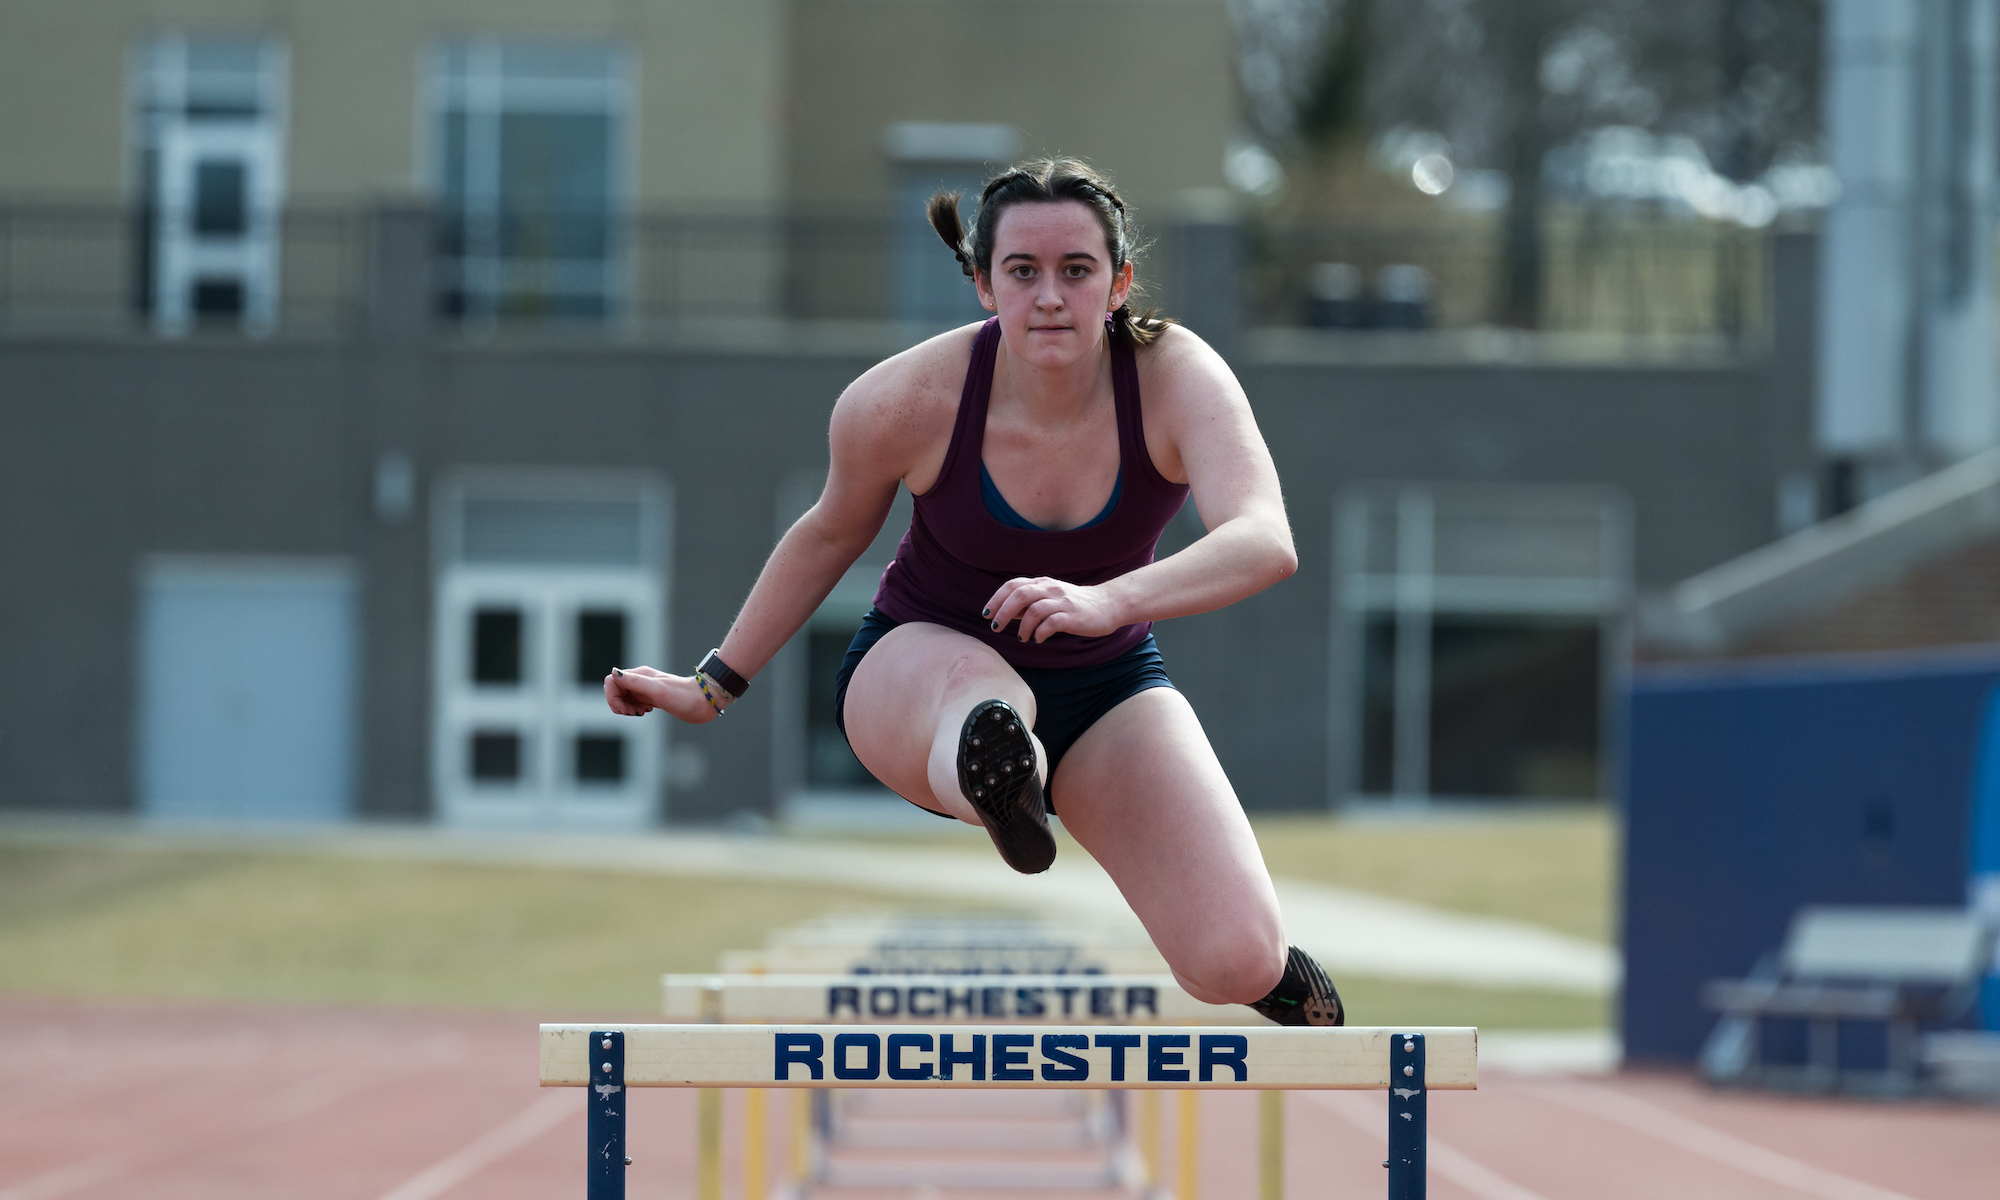 Female hurdler jumps over a Rochester-branded hurdle